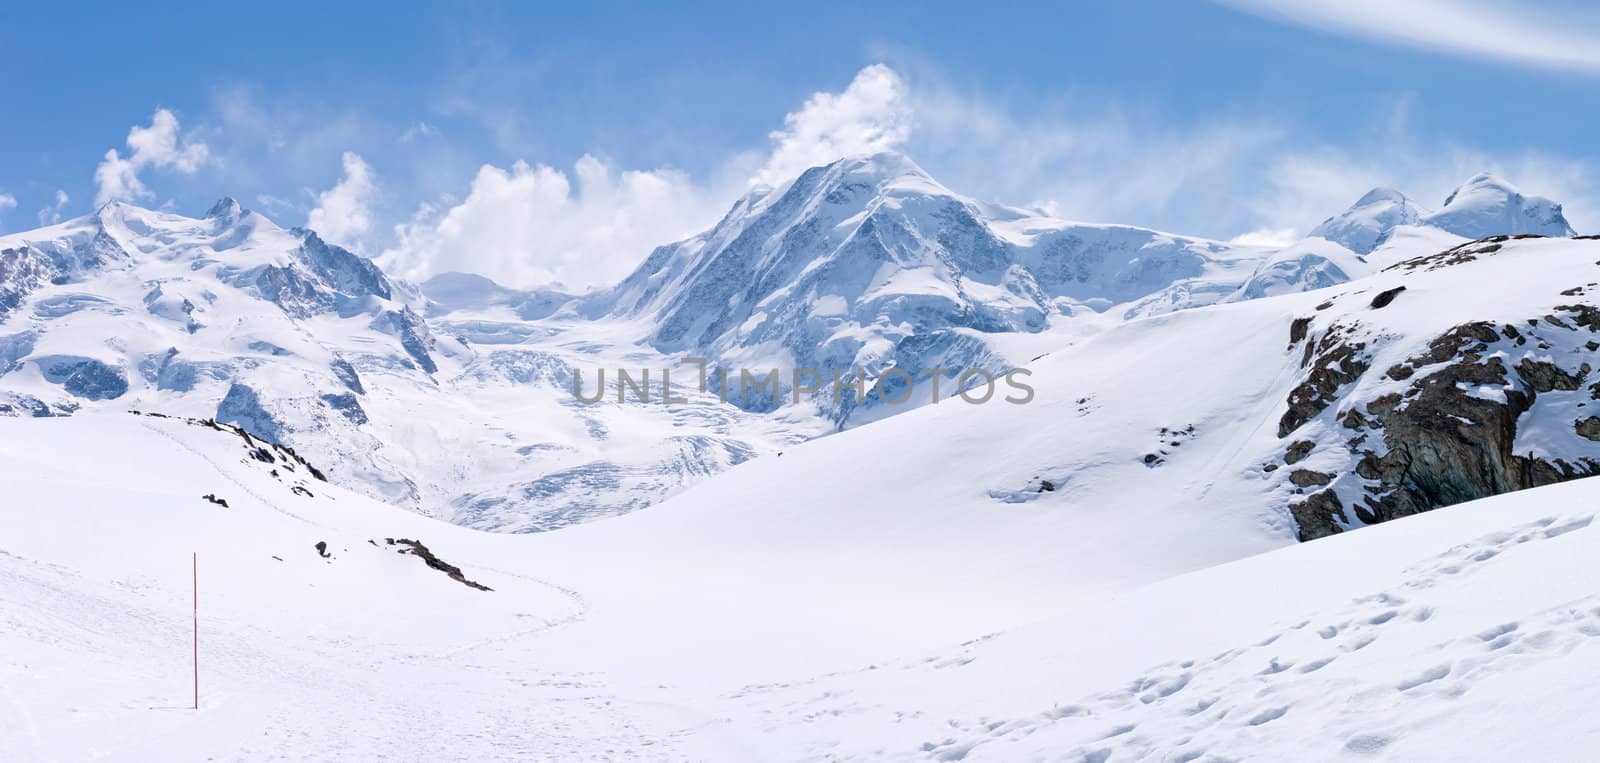 Panorama of Snow Mountain Range Landscape at Matterhorn Alps Alpine Region Switzerland